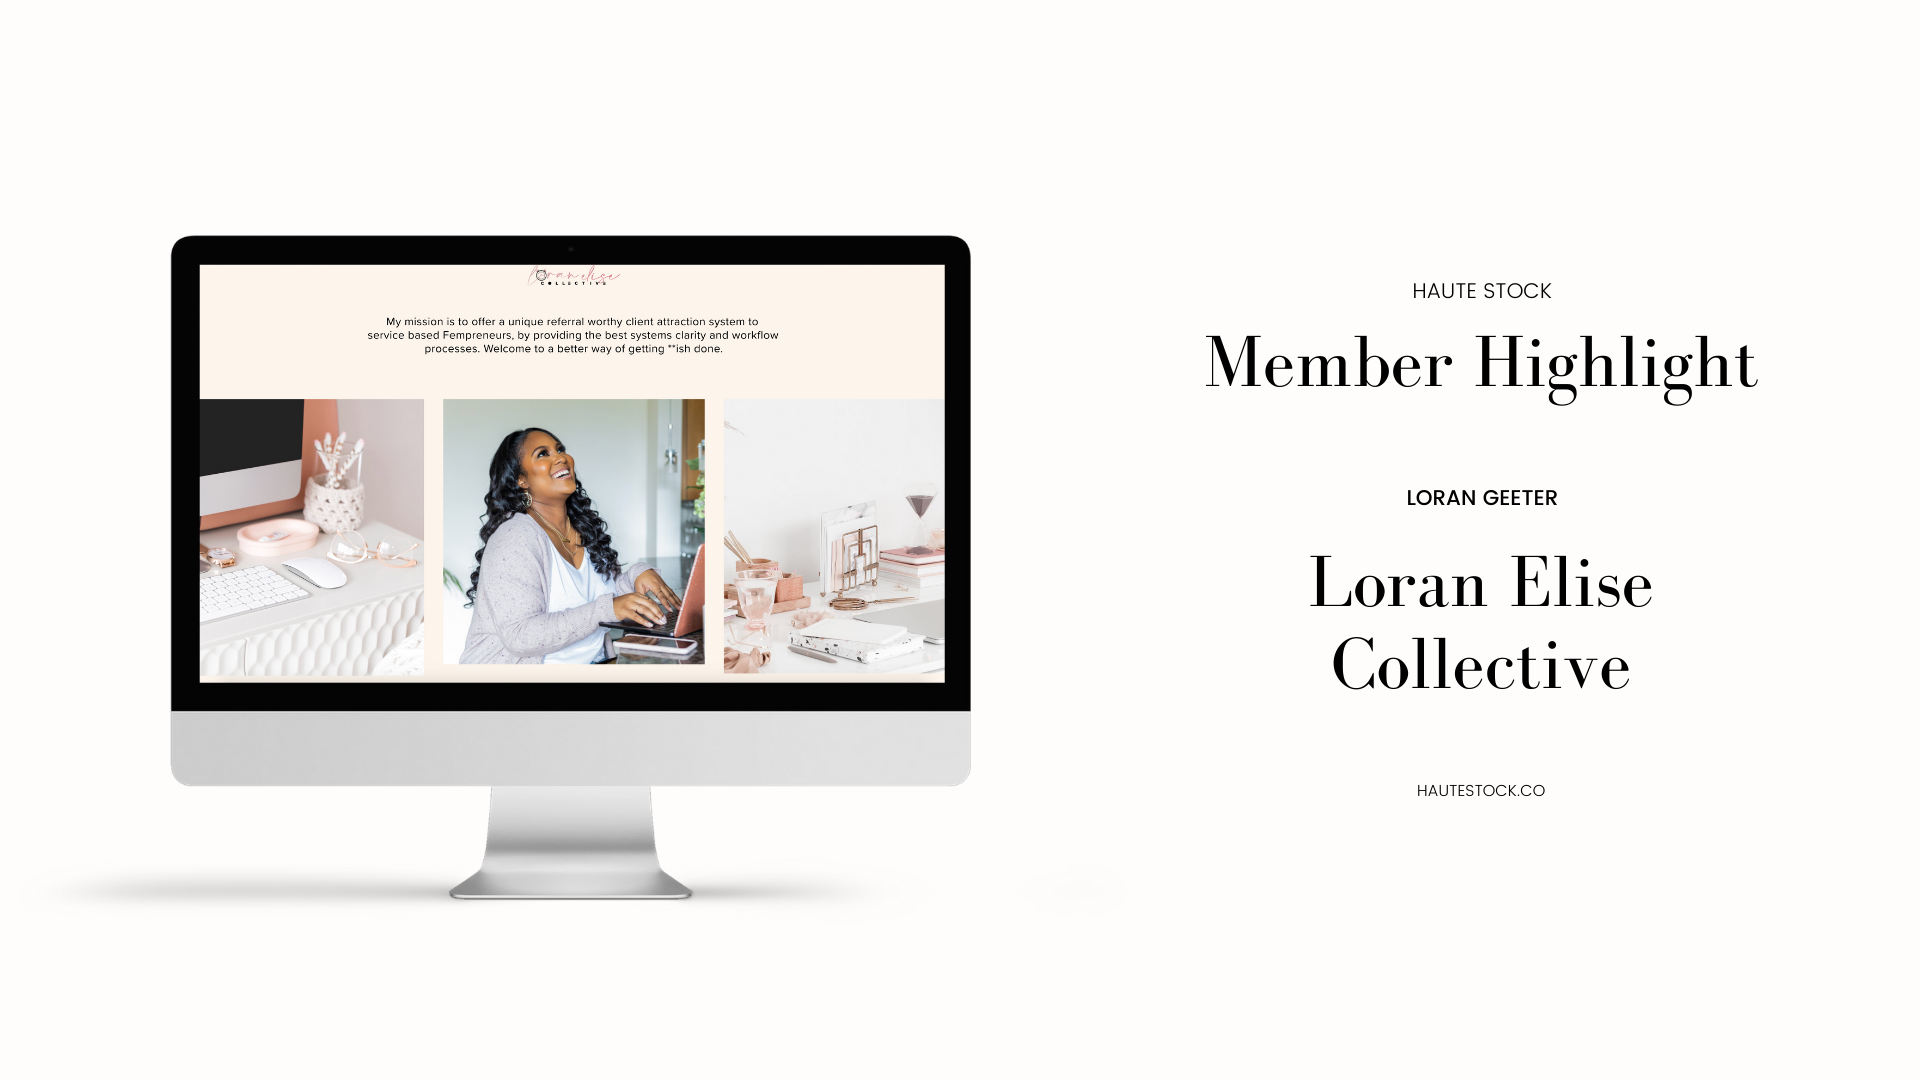 Meet Loran Geeter, of Loran Elise Collective, in Haute Stock's newest Member Highlight!